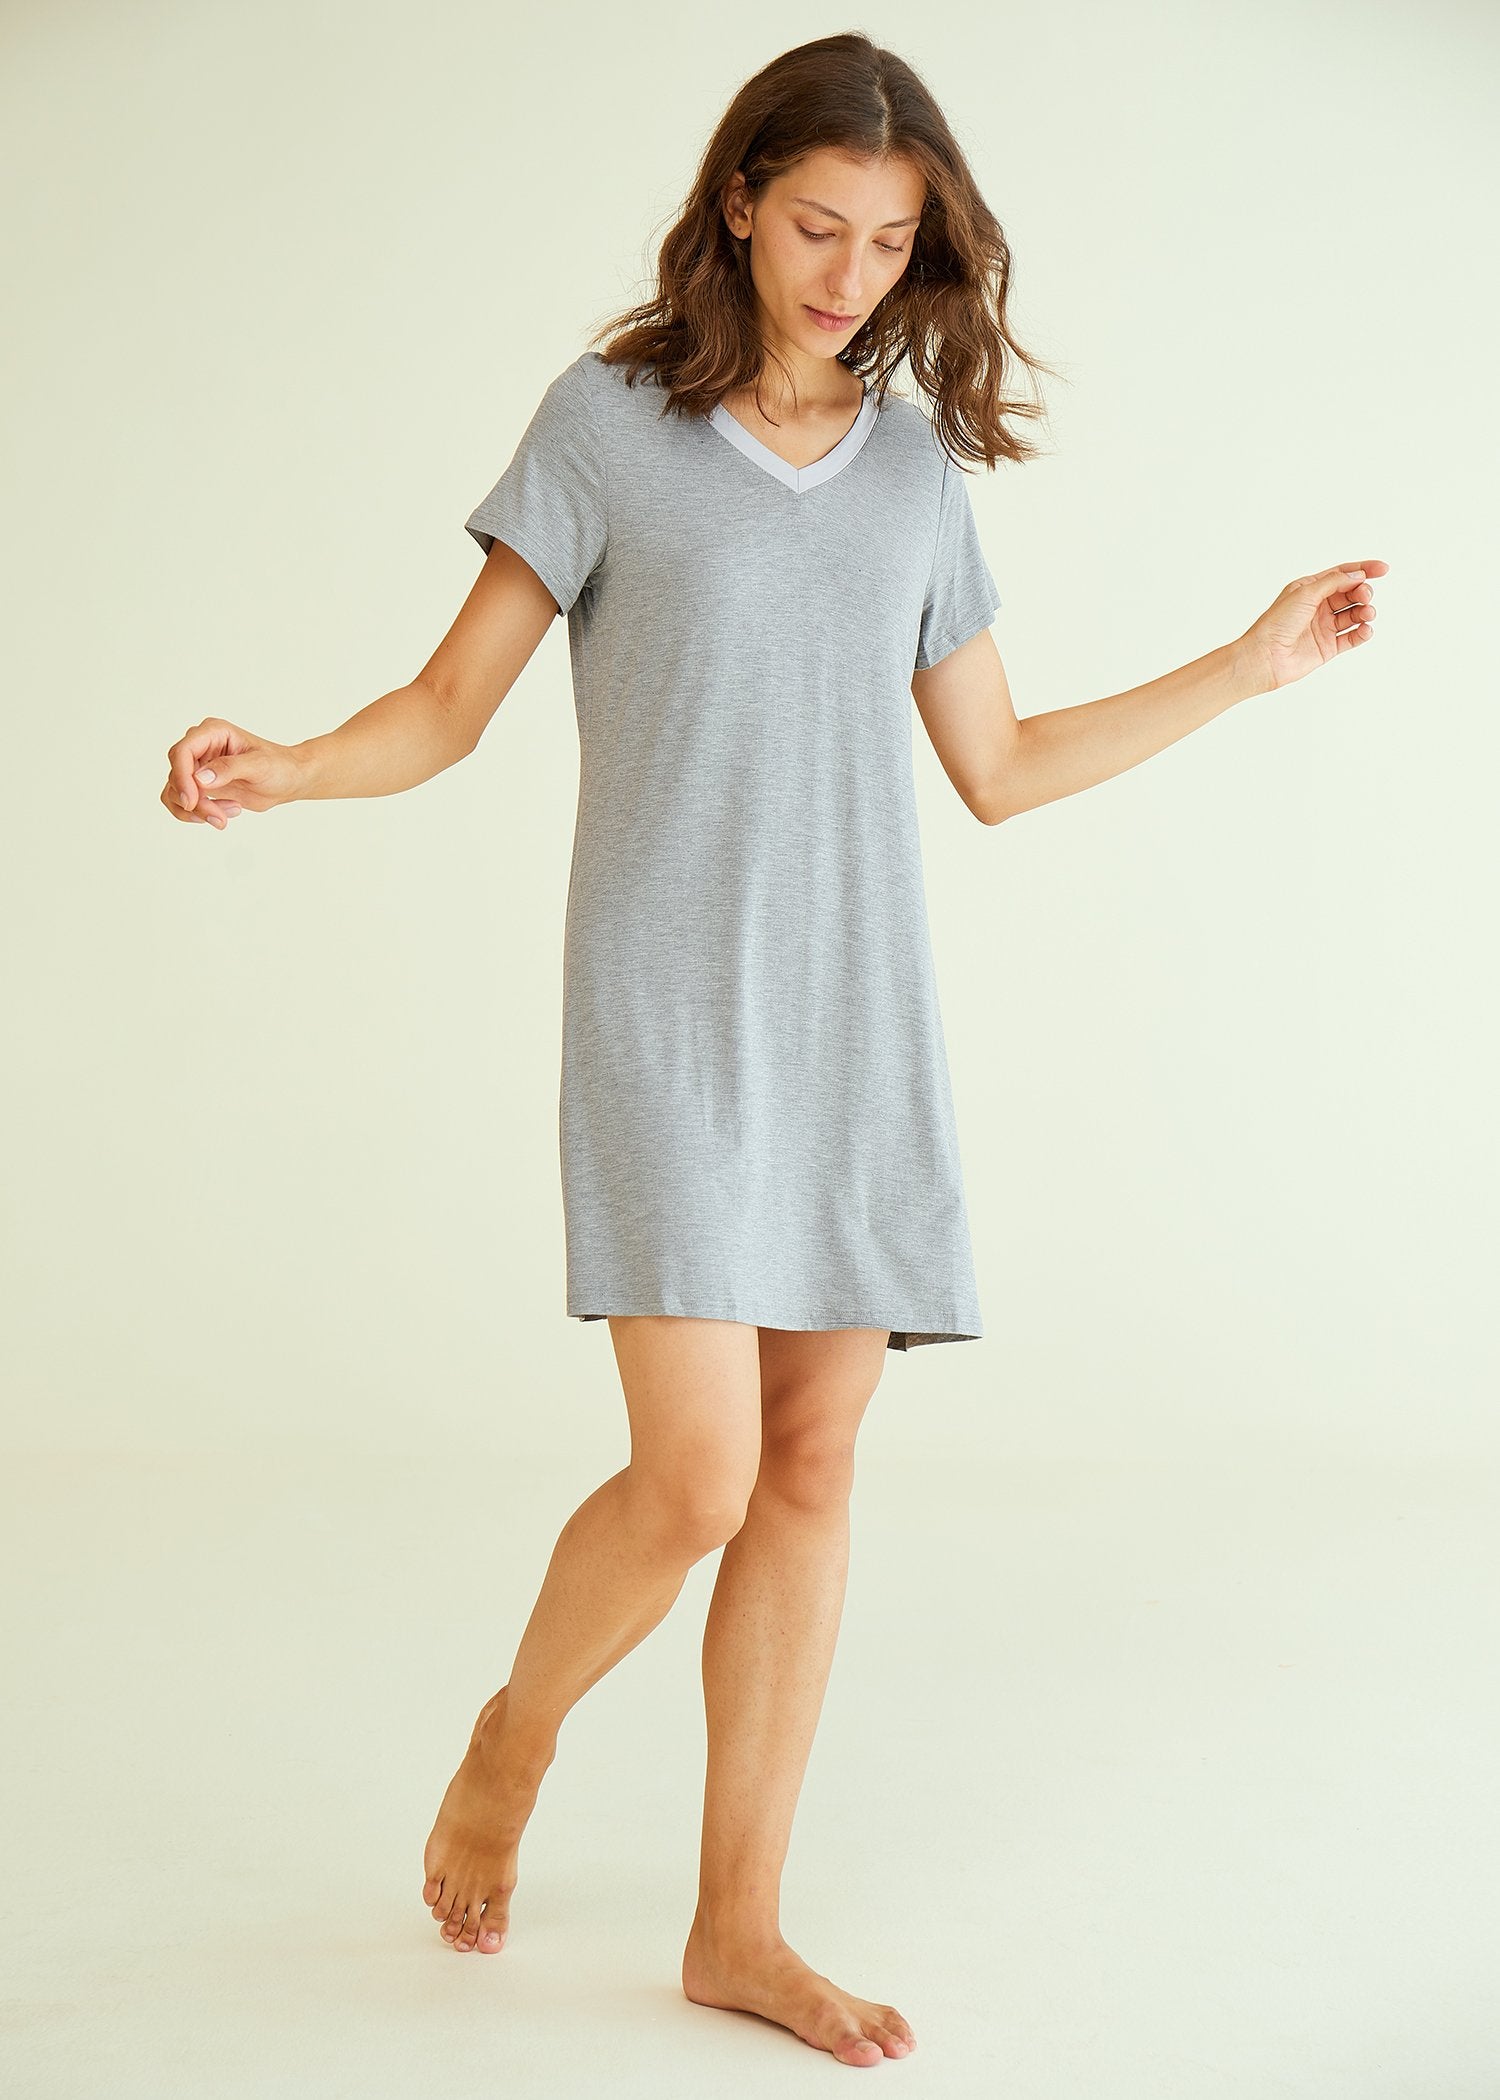 Joyspun Women's Short Sleeve Sleep Shirts, 2-Pack, Sizes S/M to 2X/3X 